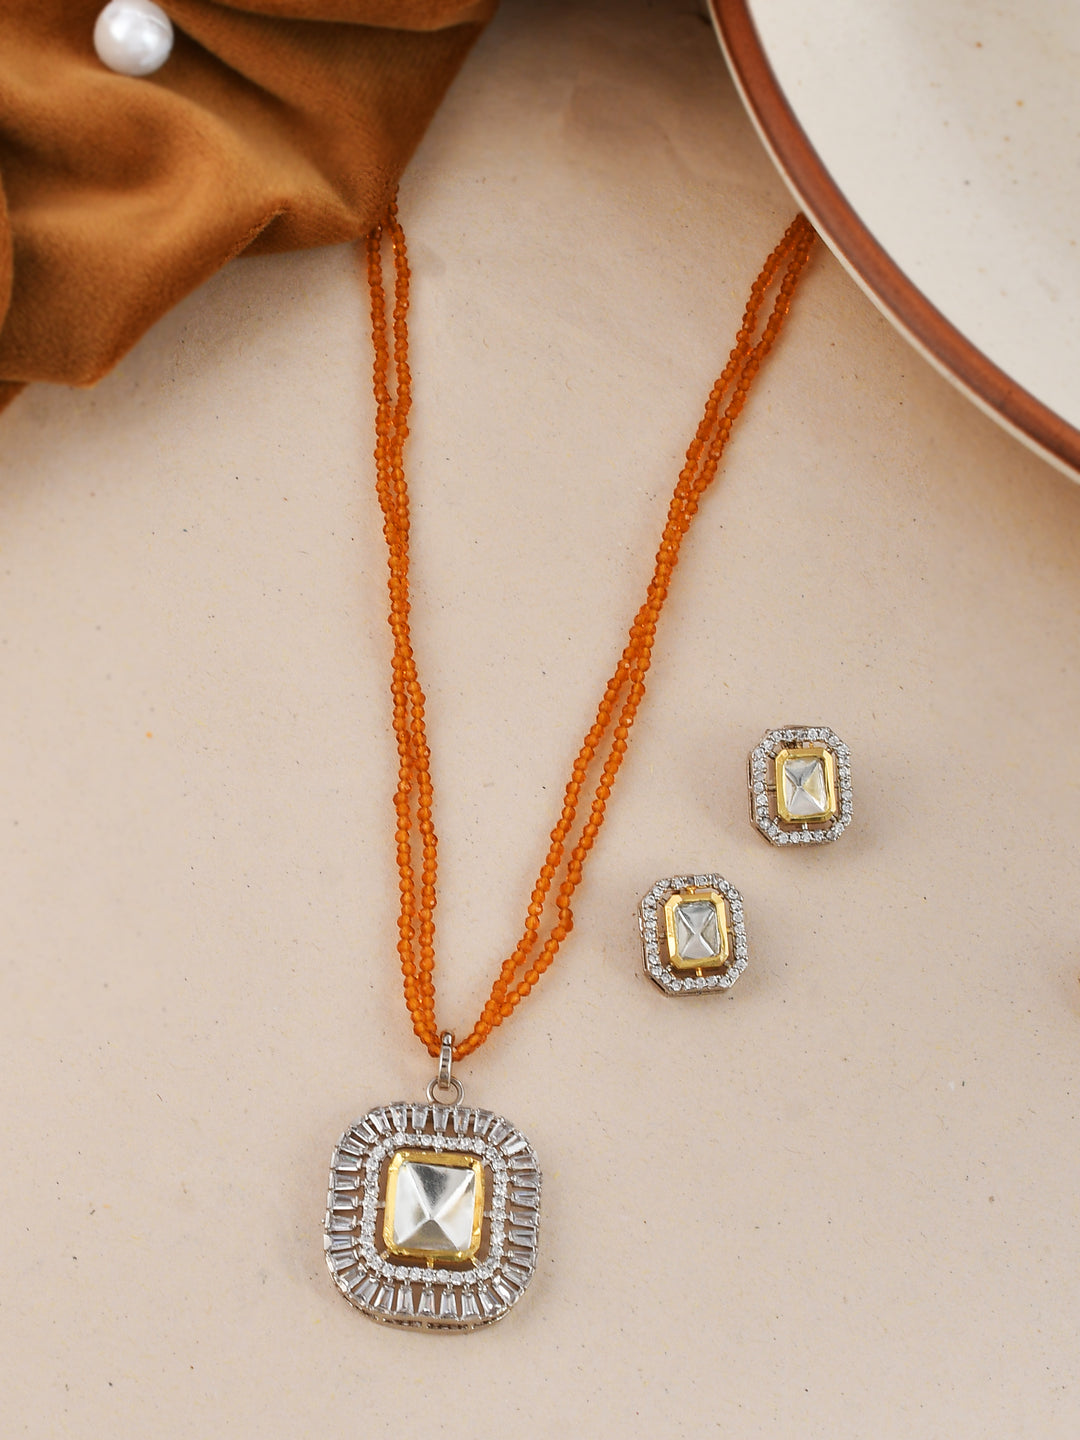 A magnificent Polki jewelry set